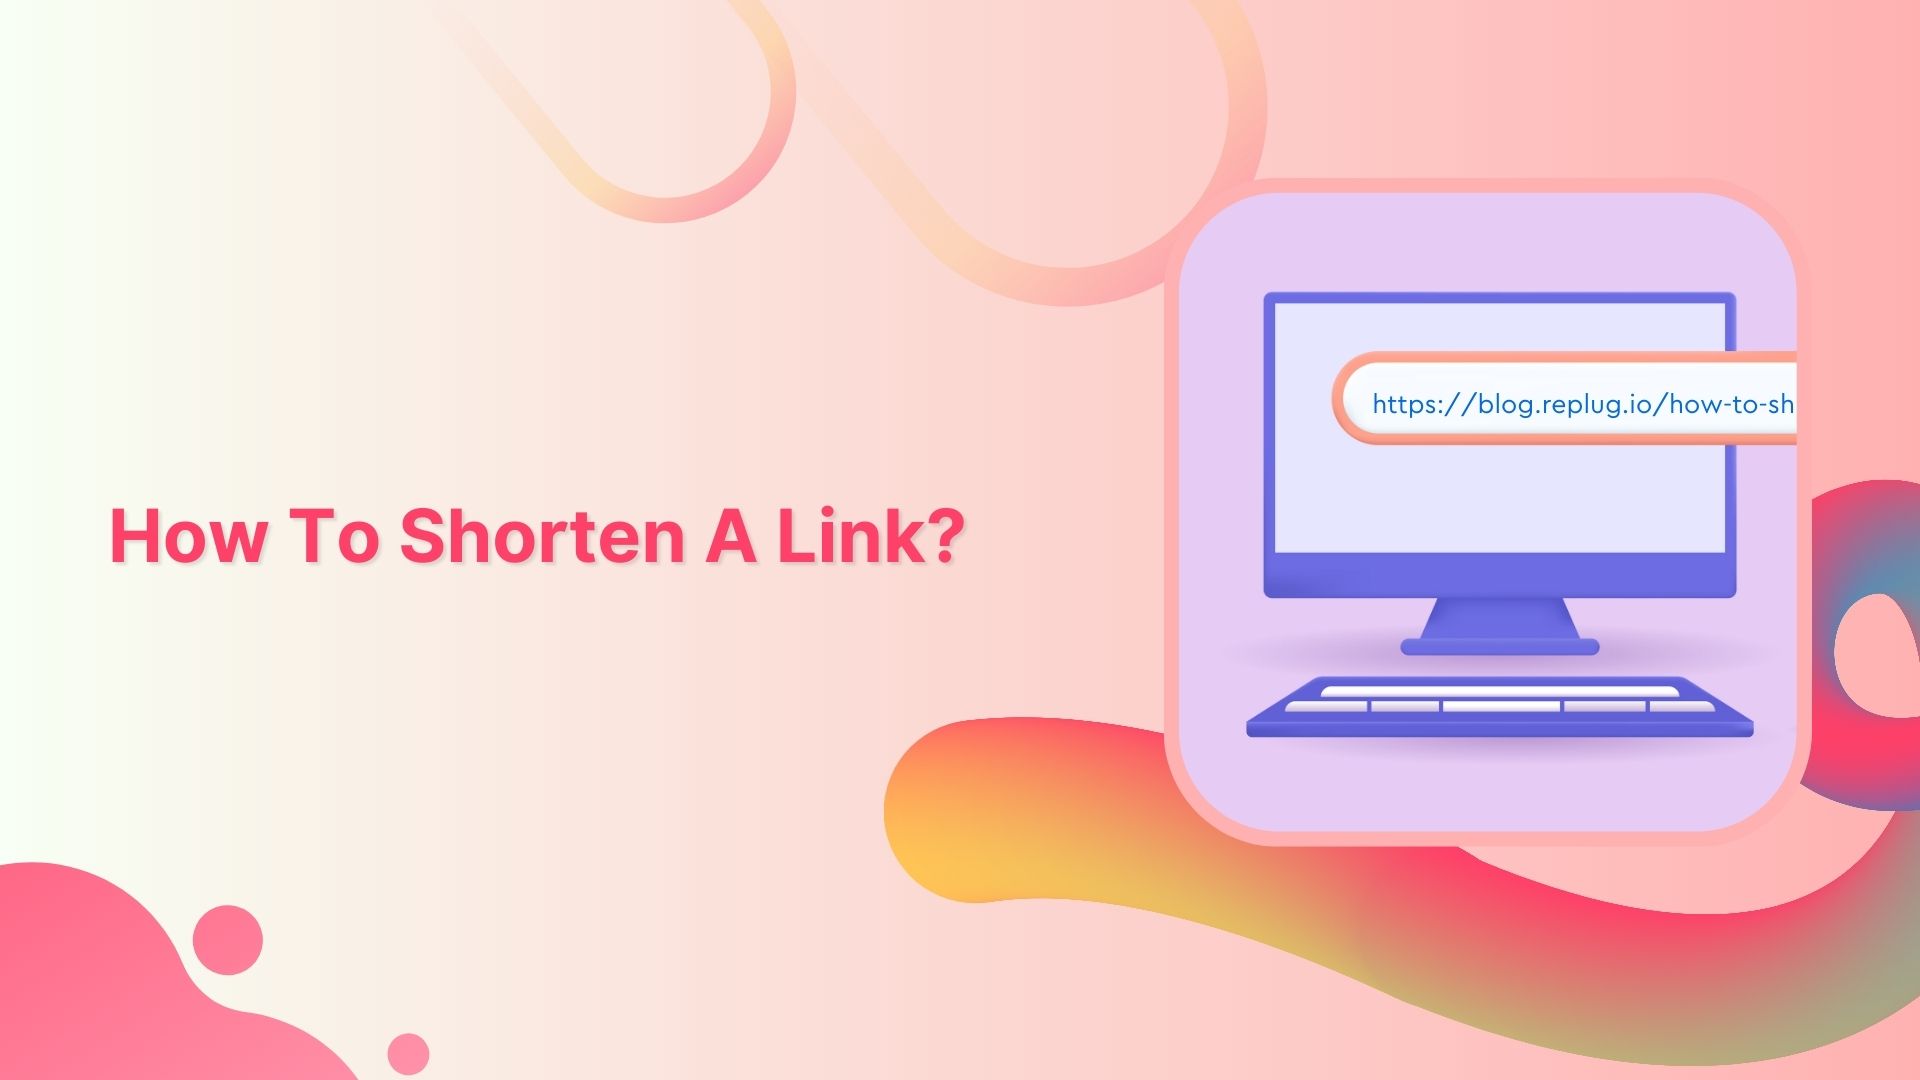 How to Shorten a link using a URL shortener?